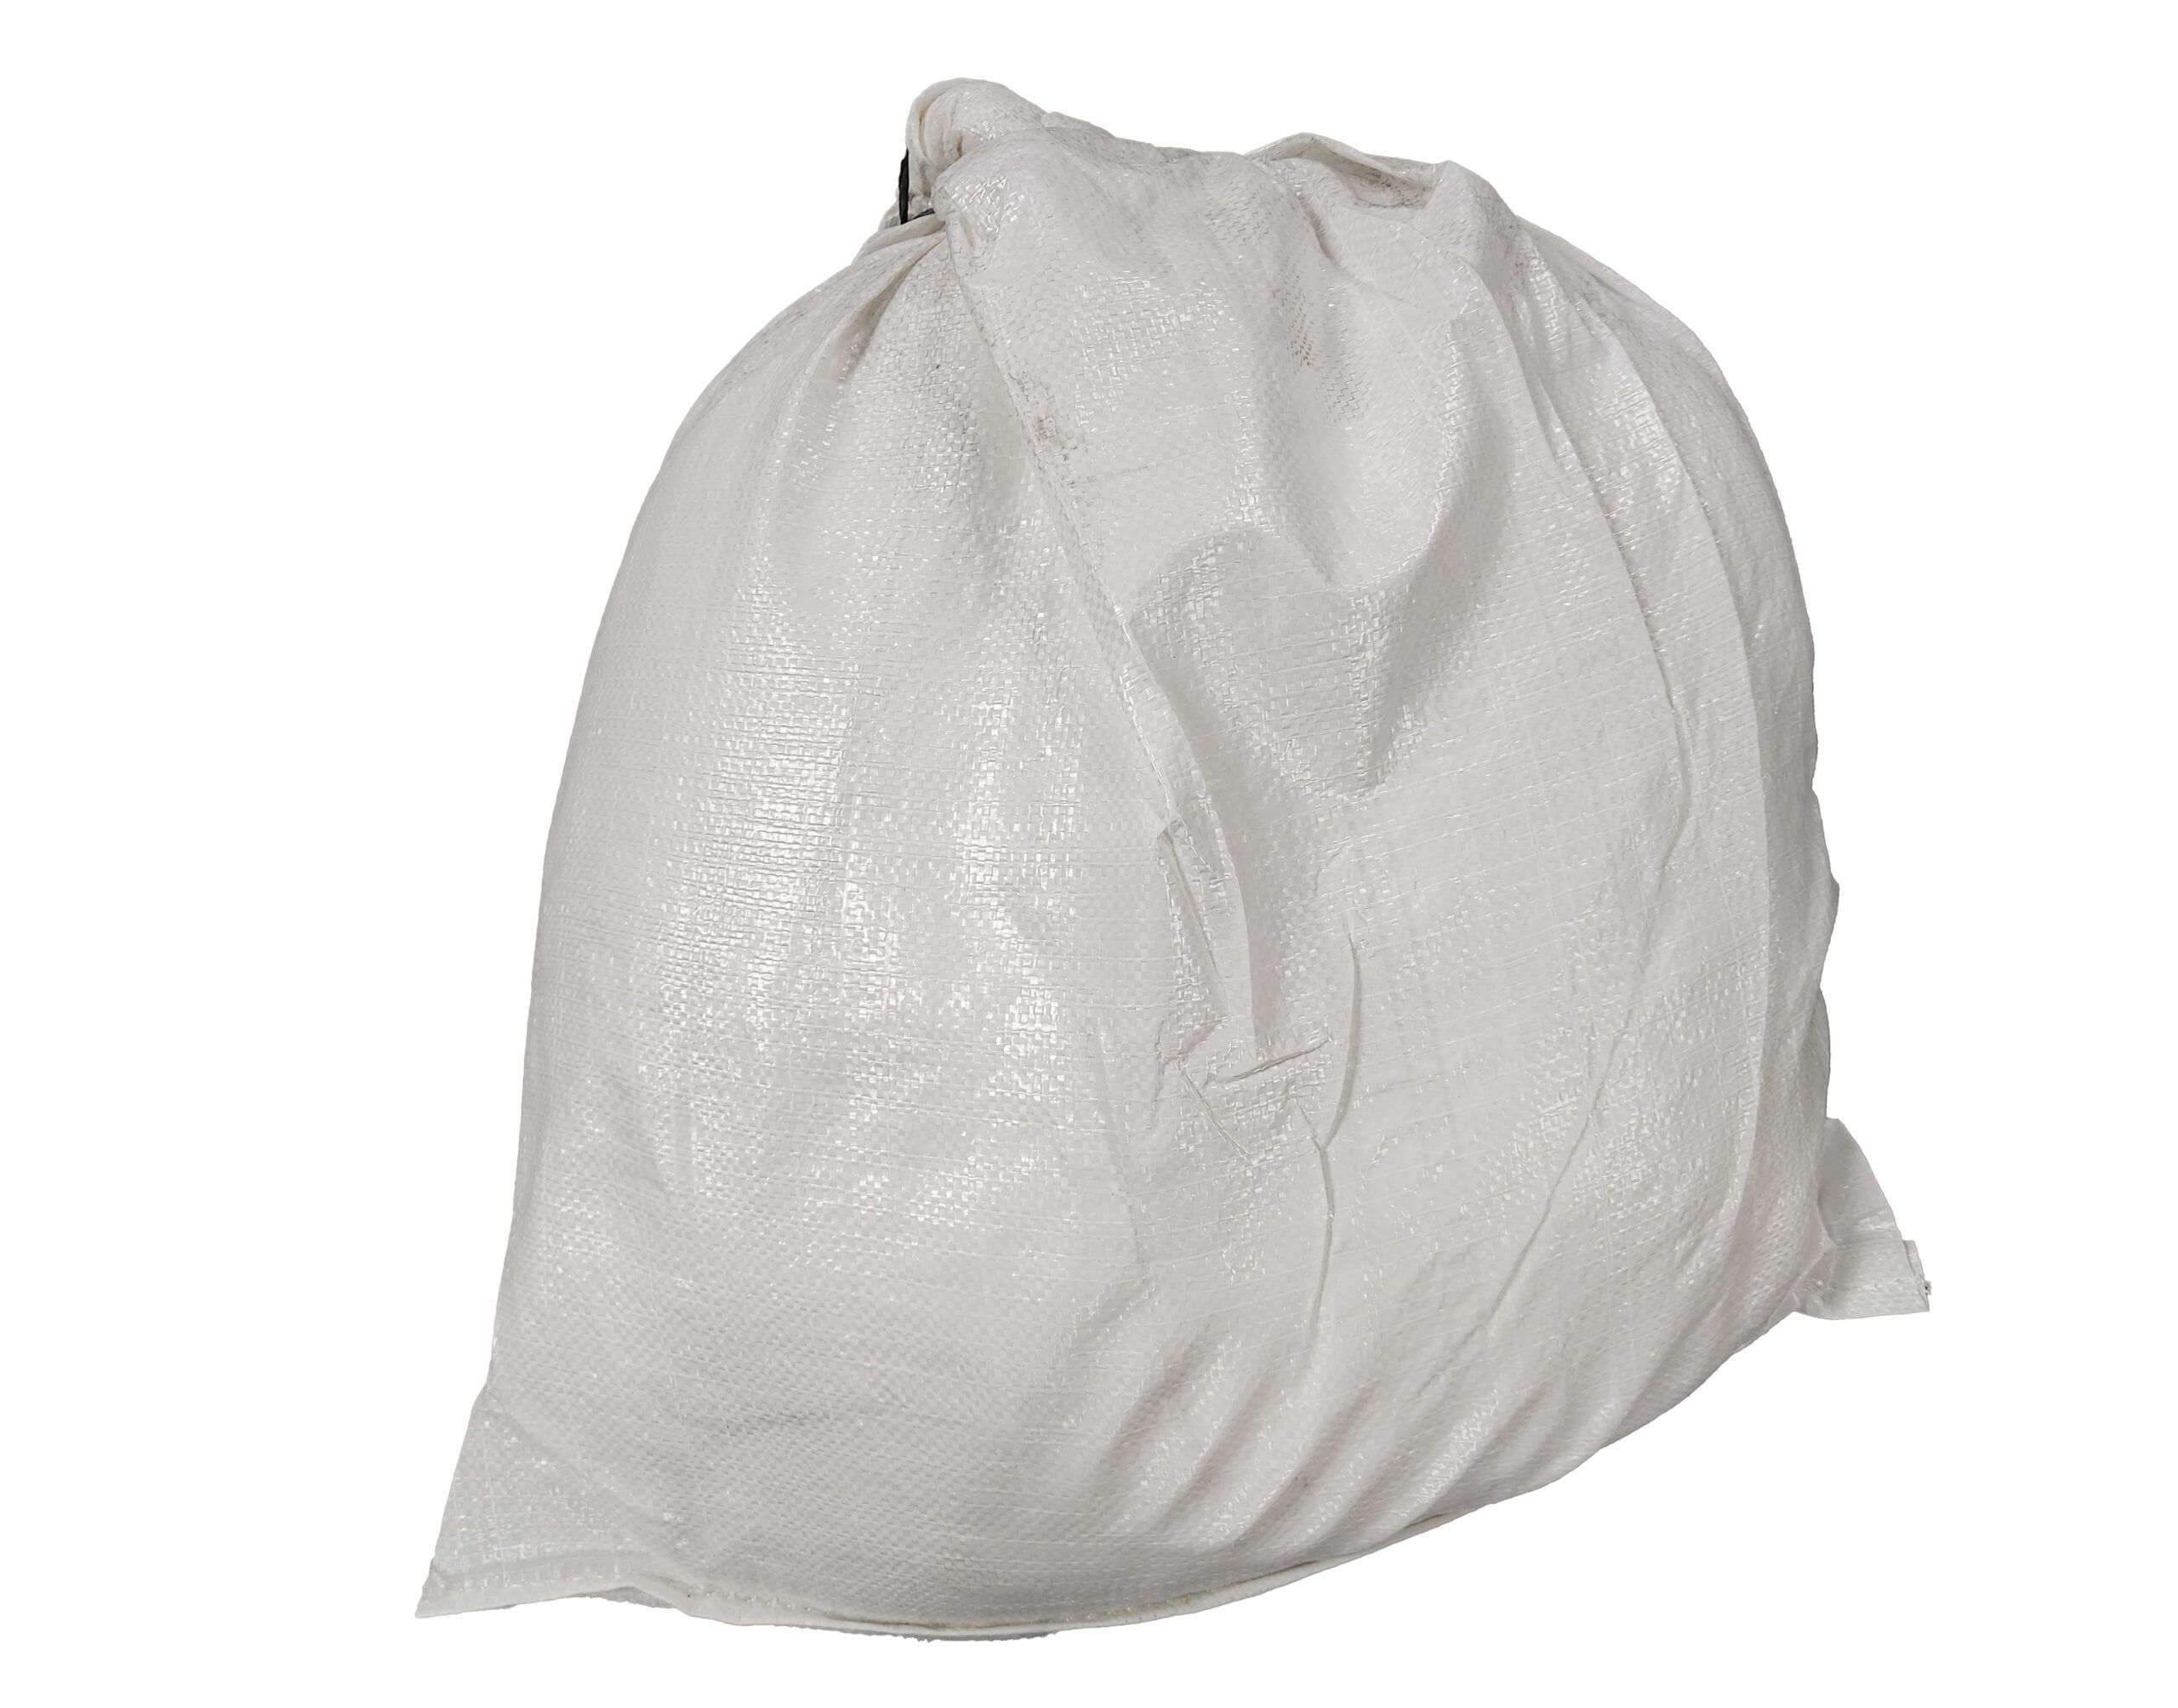 bag of zinc carbonate